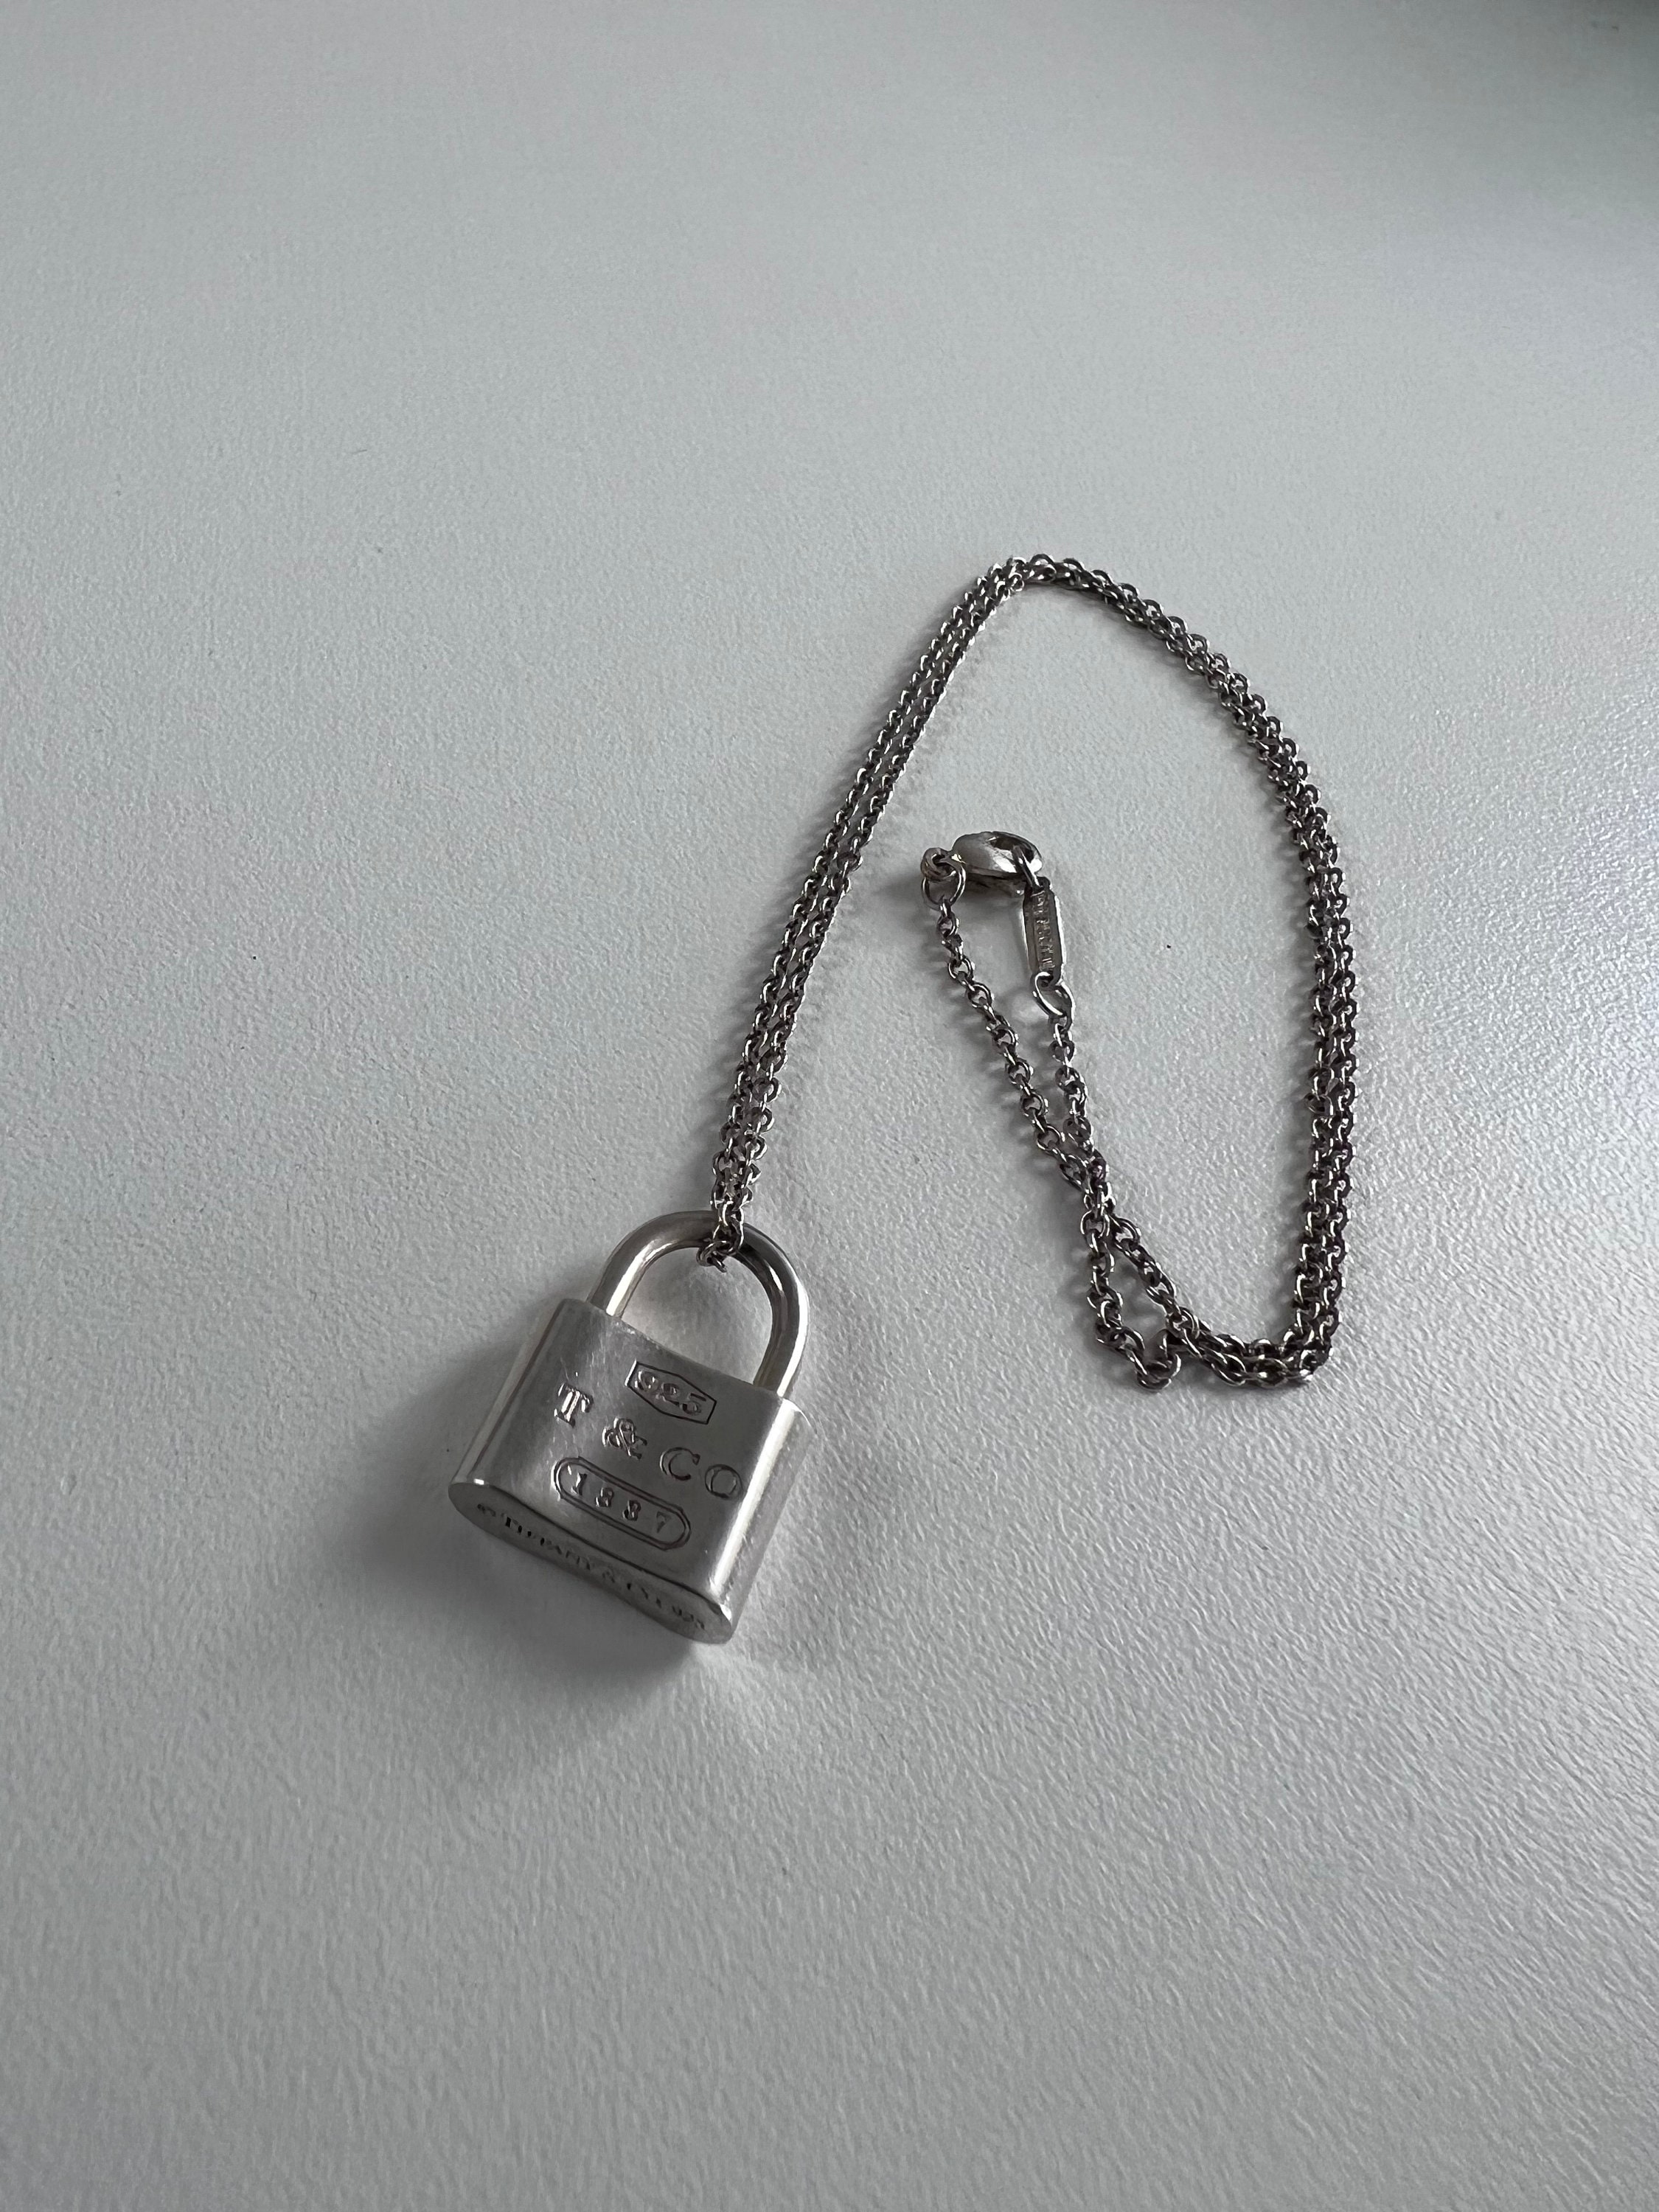 Sold at Auction: Tiffany & Co. 1837 Mini Lock Padlock Necklace 16